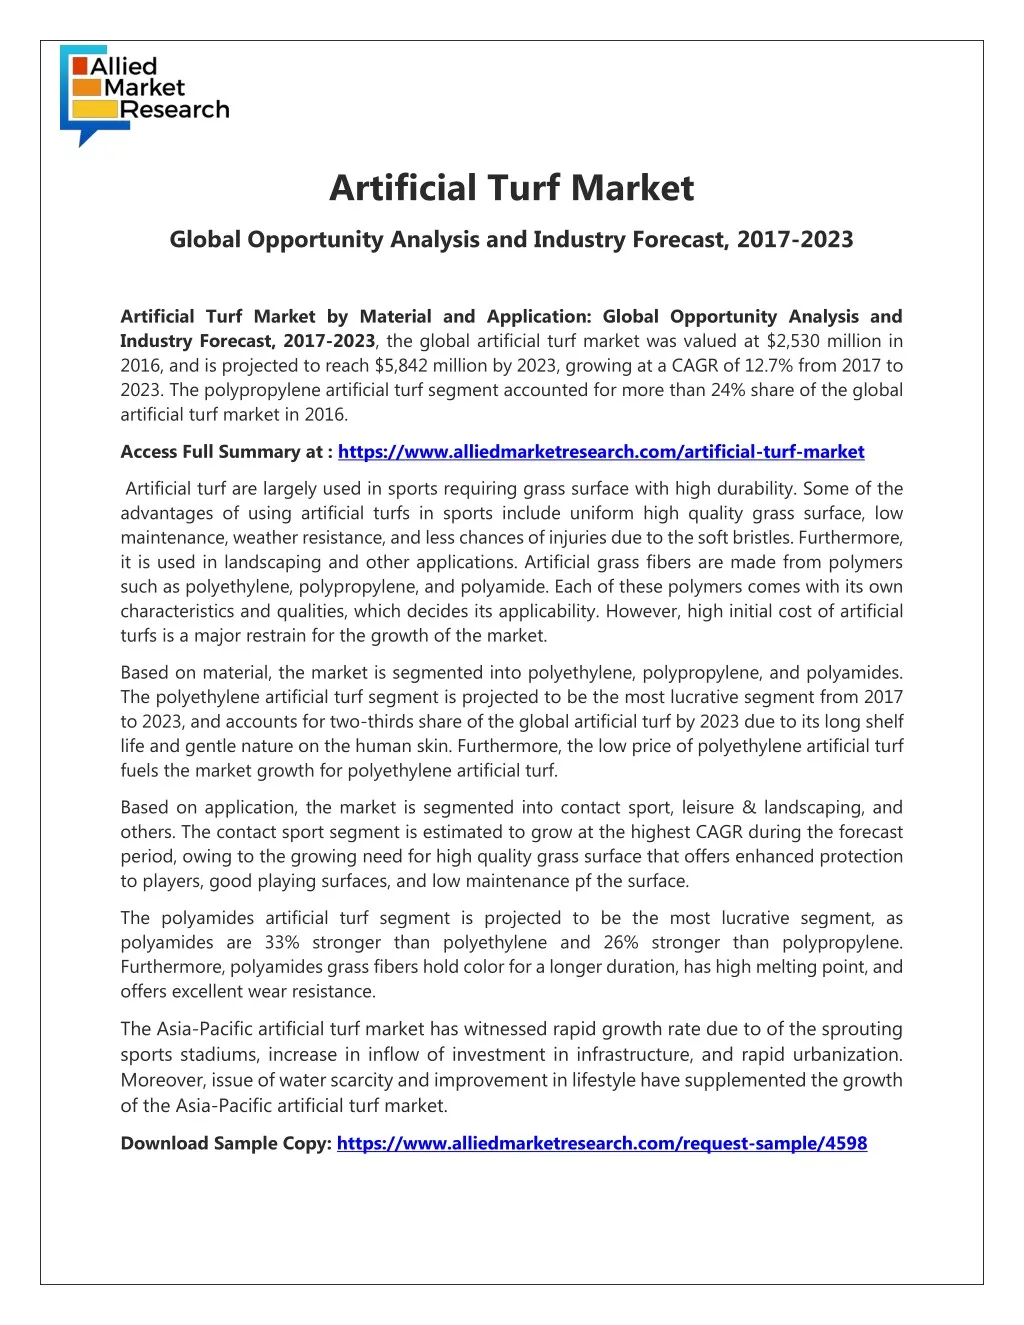 artificial turf market